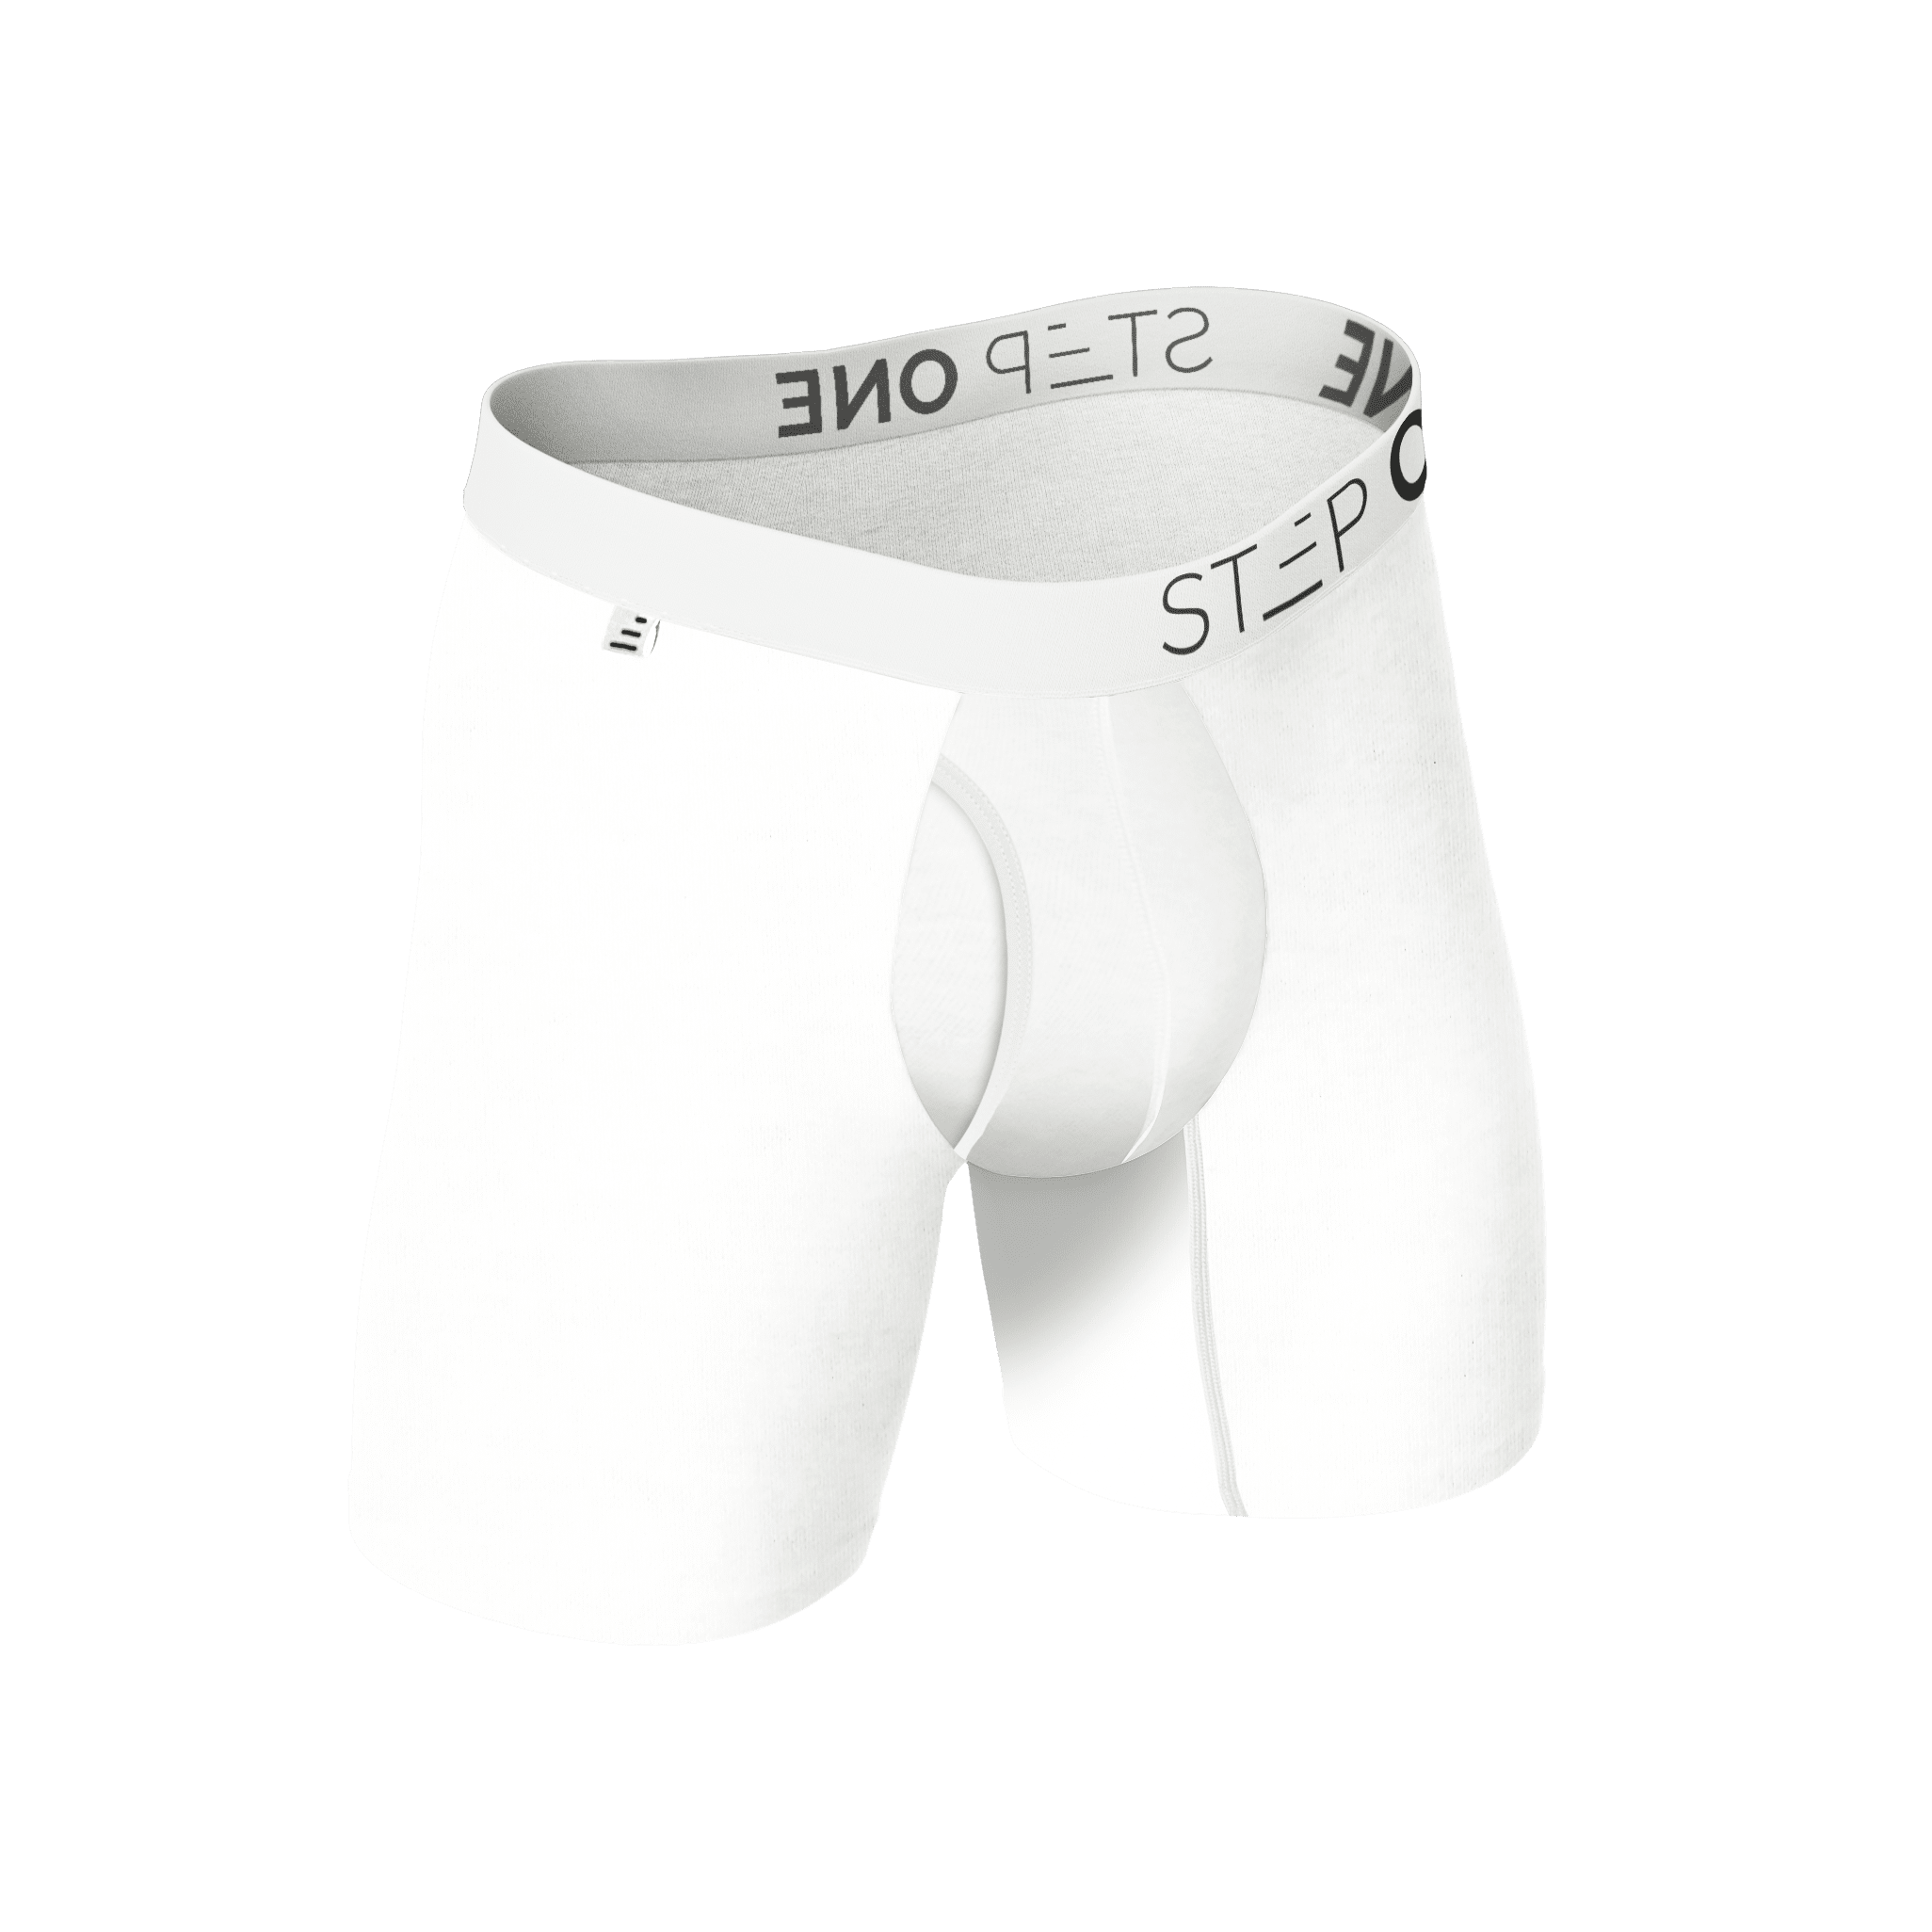 Buy Mens Bamboo Underwear UK